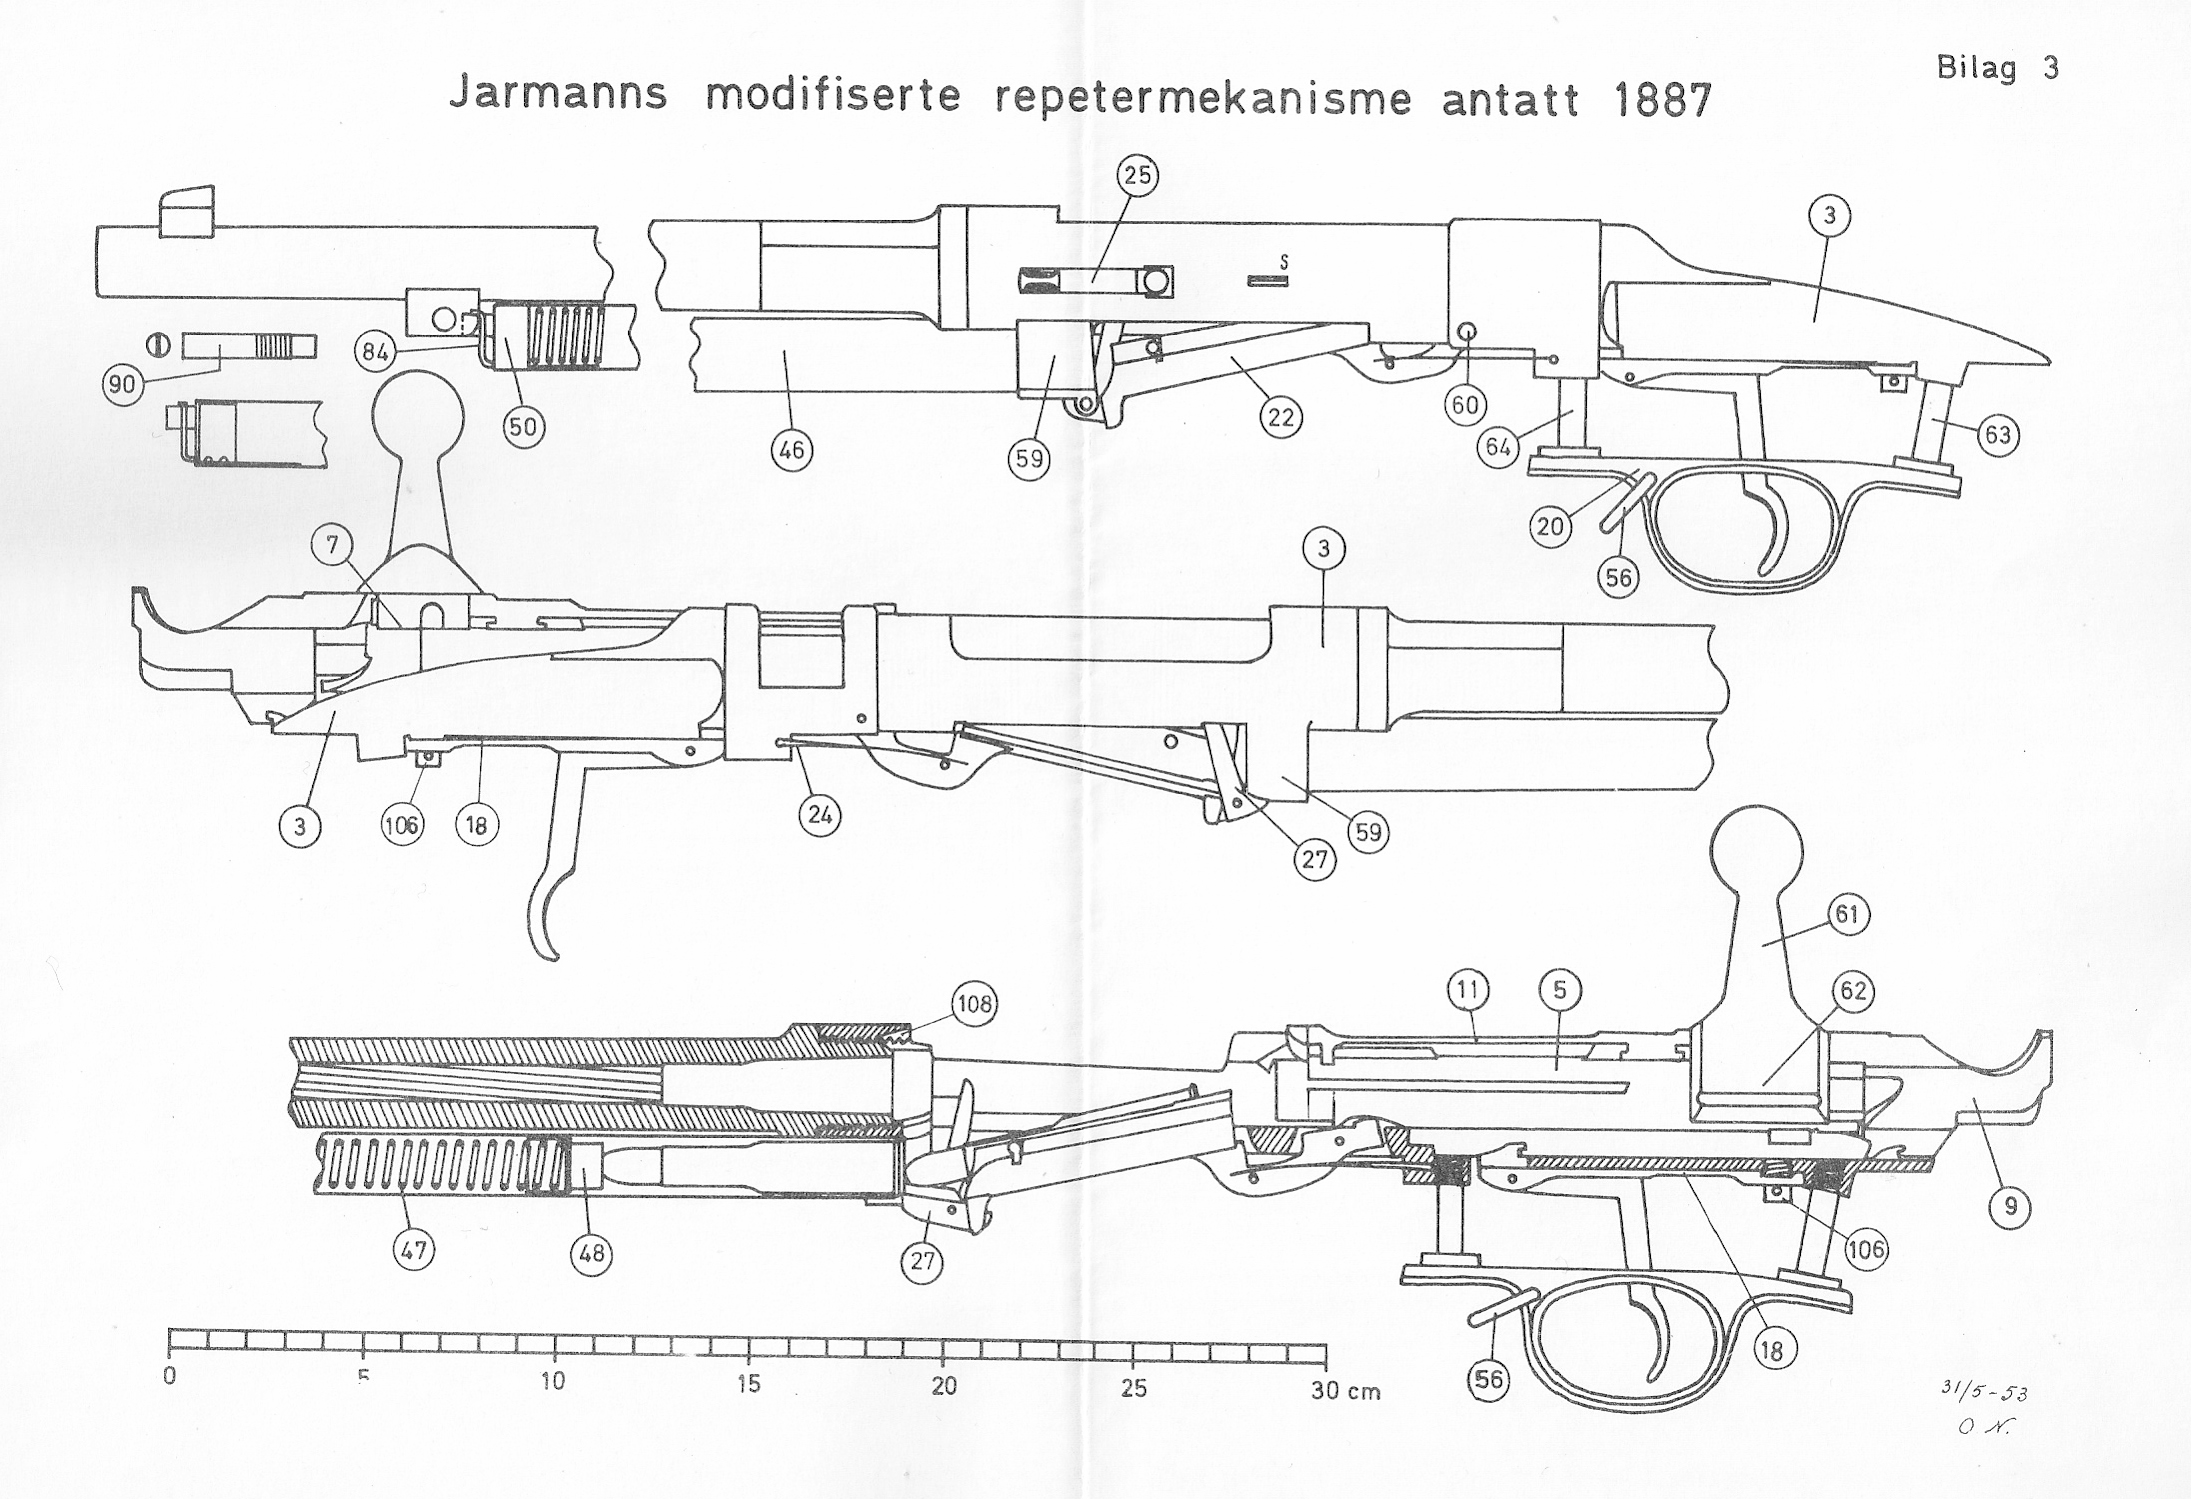 ./guns/rifle/bilder/Rifle-Kongsberg-Jarmann-M1884-87-1.jpg